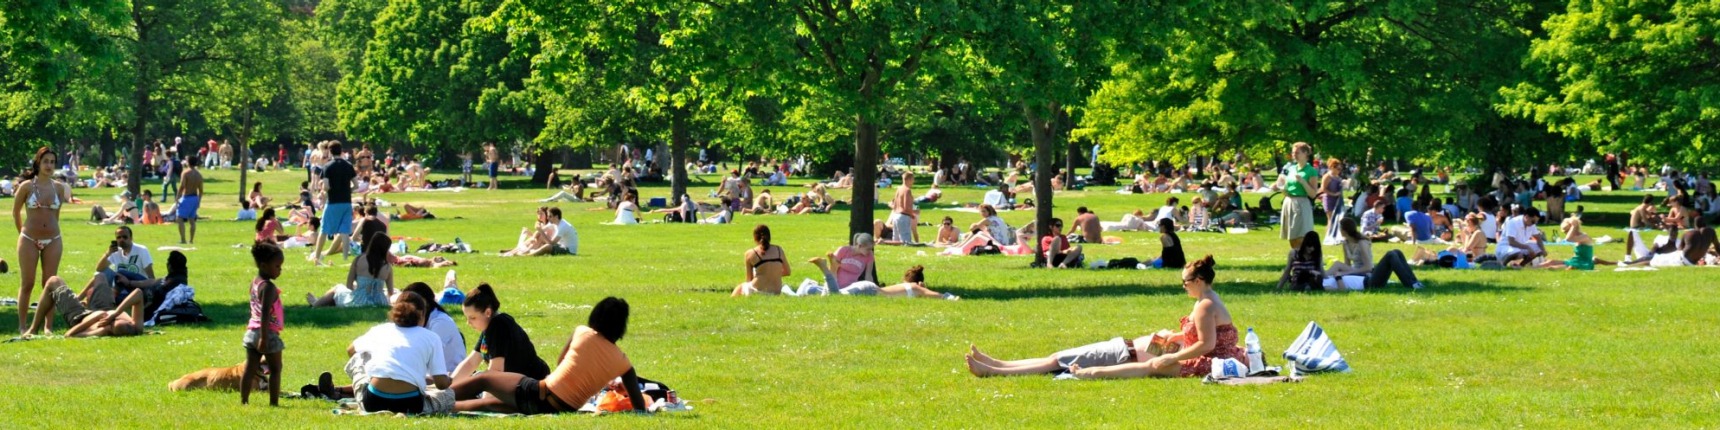 Park in London